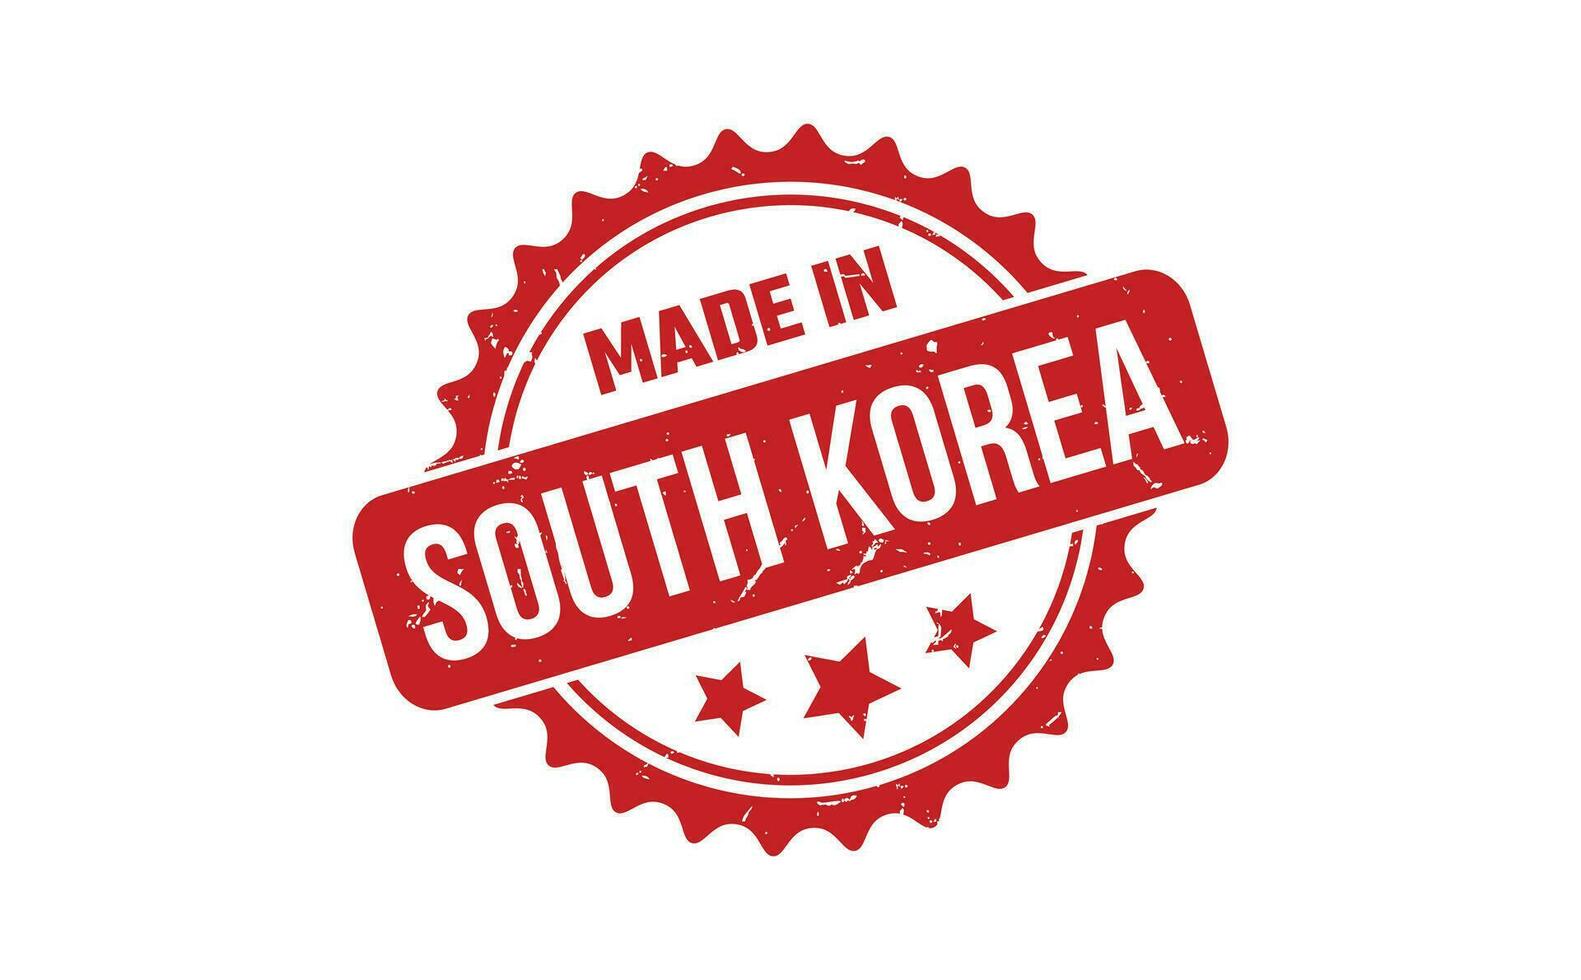 gemacht im Süd Korea Gummi Briefmarke vektor